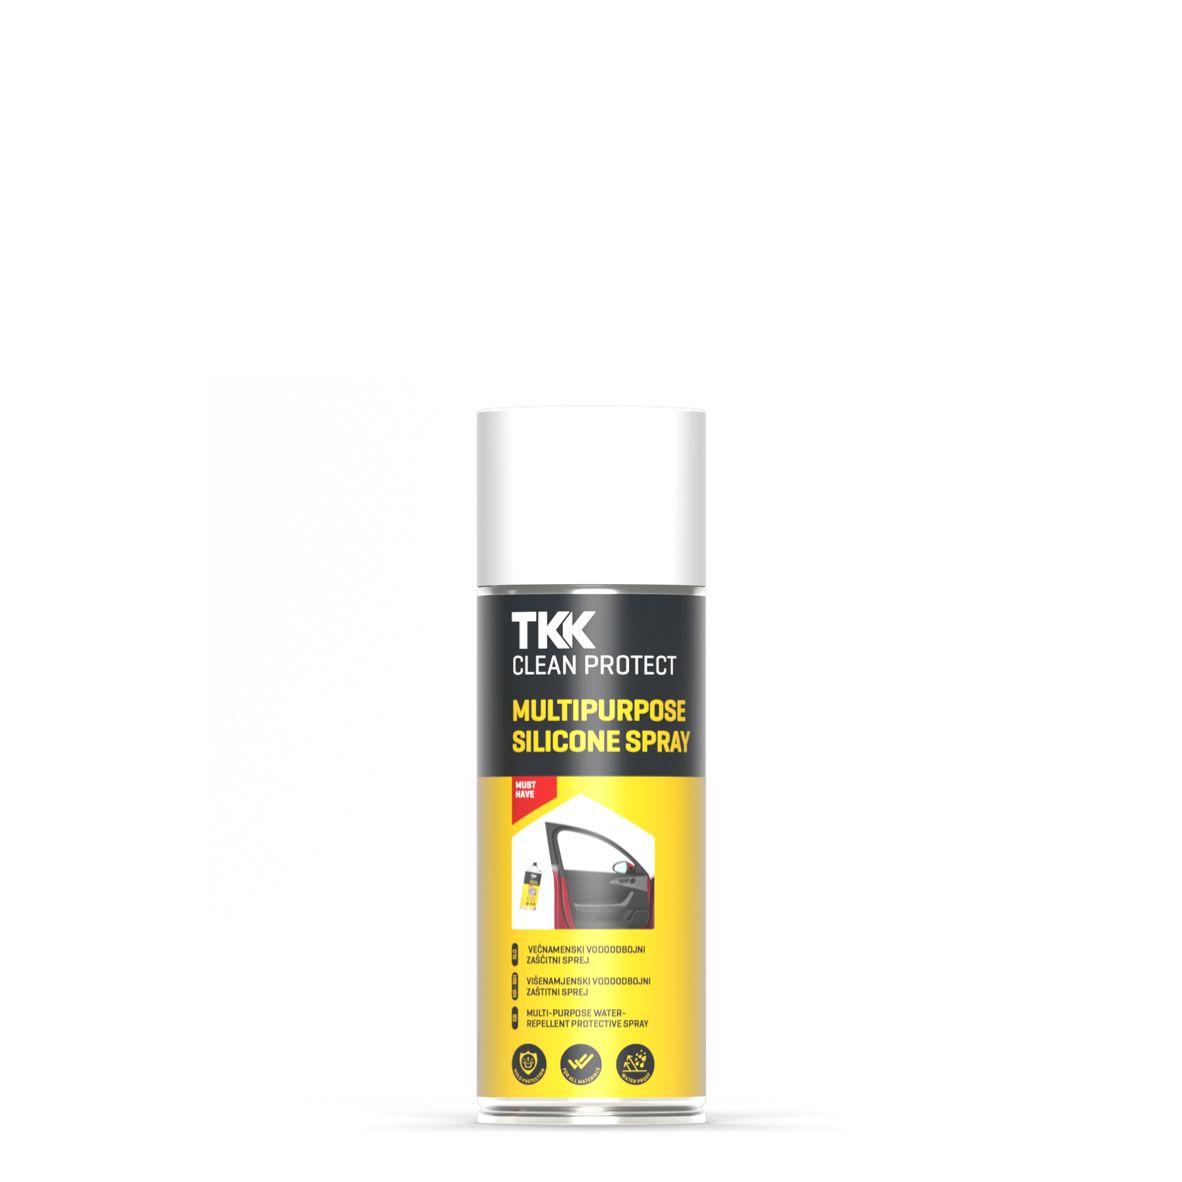 Clean protect multipurpose silicone spray